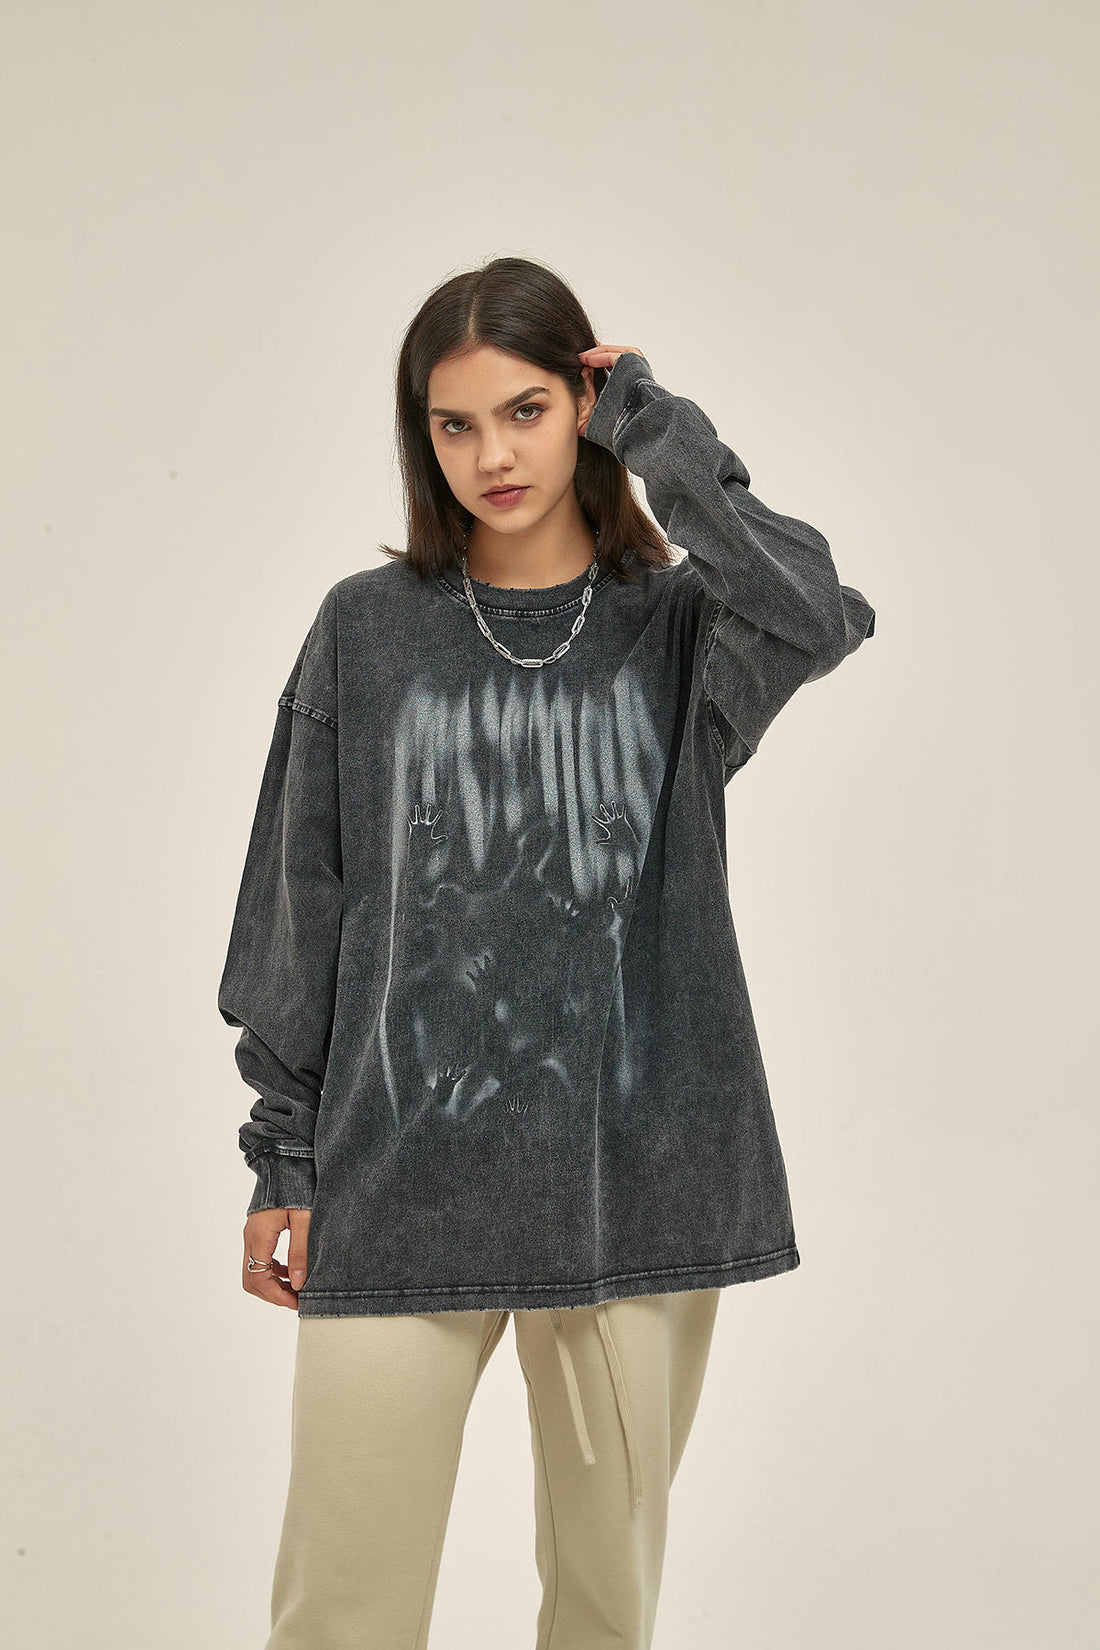 250G Washed Silhouette Print Women Long-Sleeved Sweatshirt